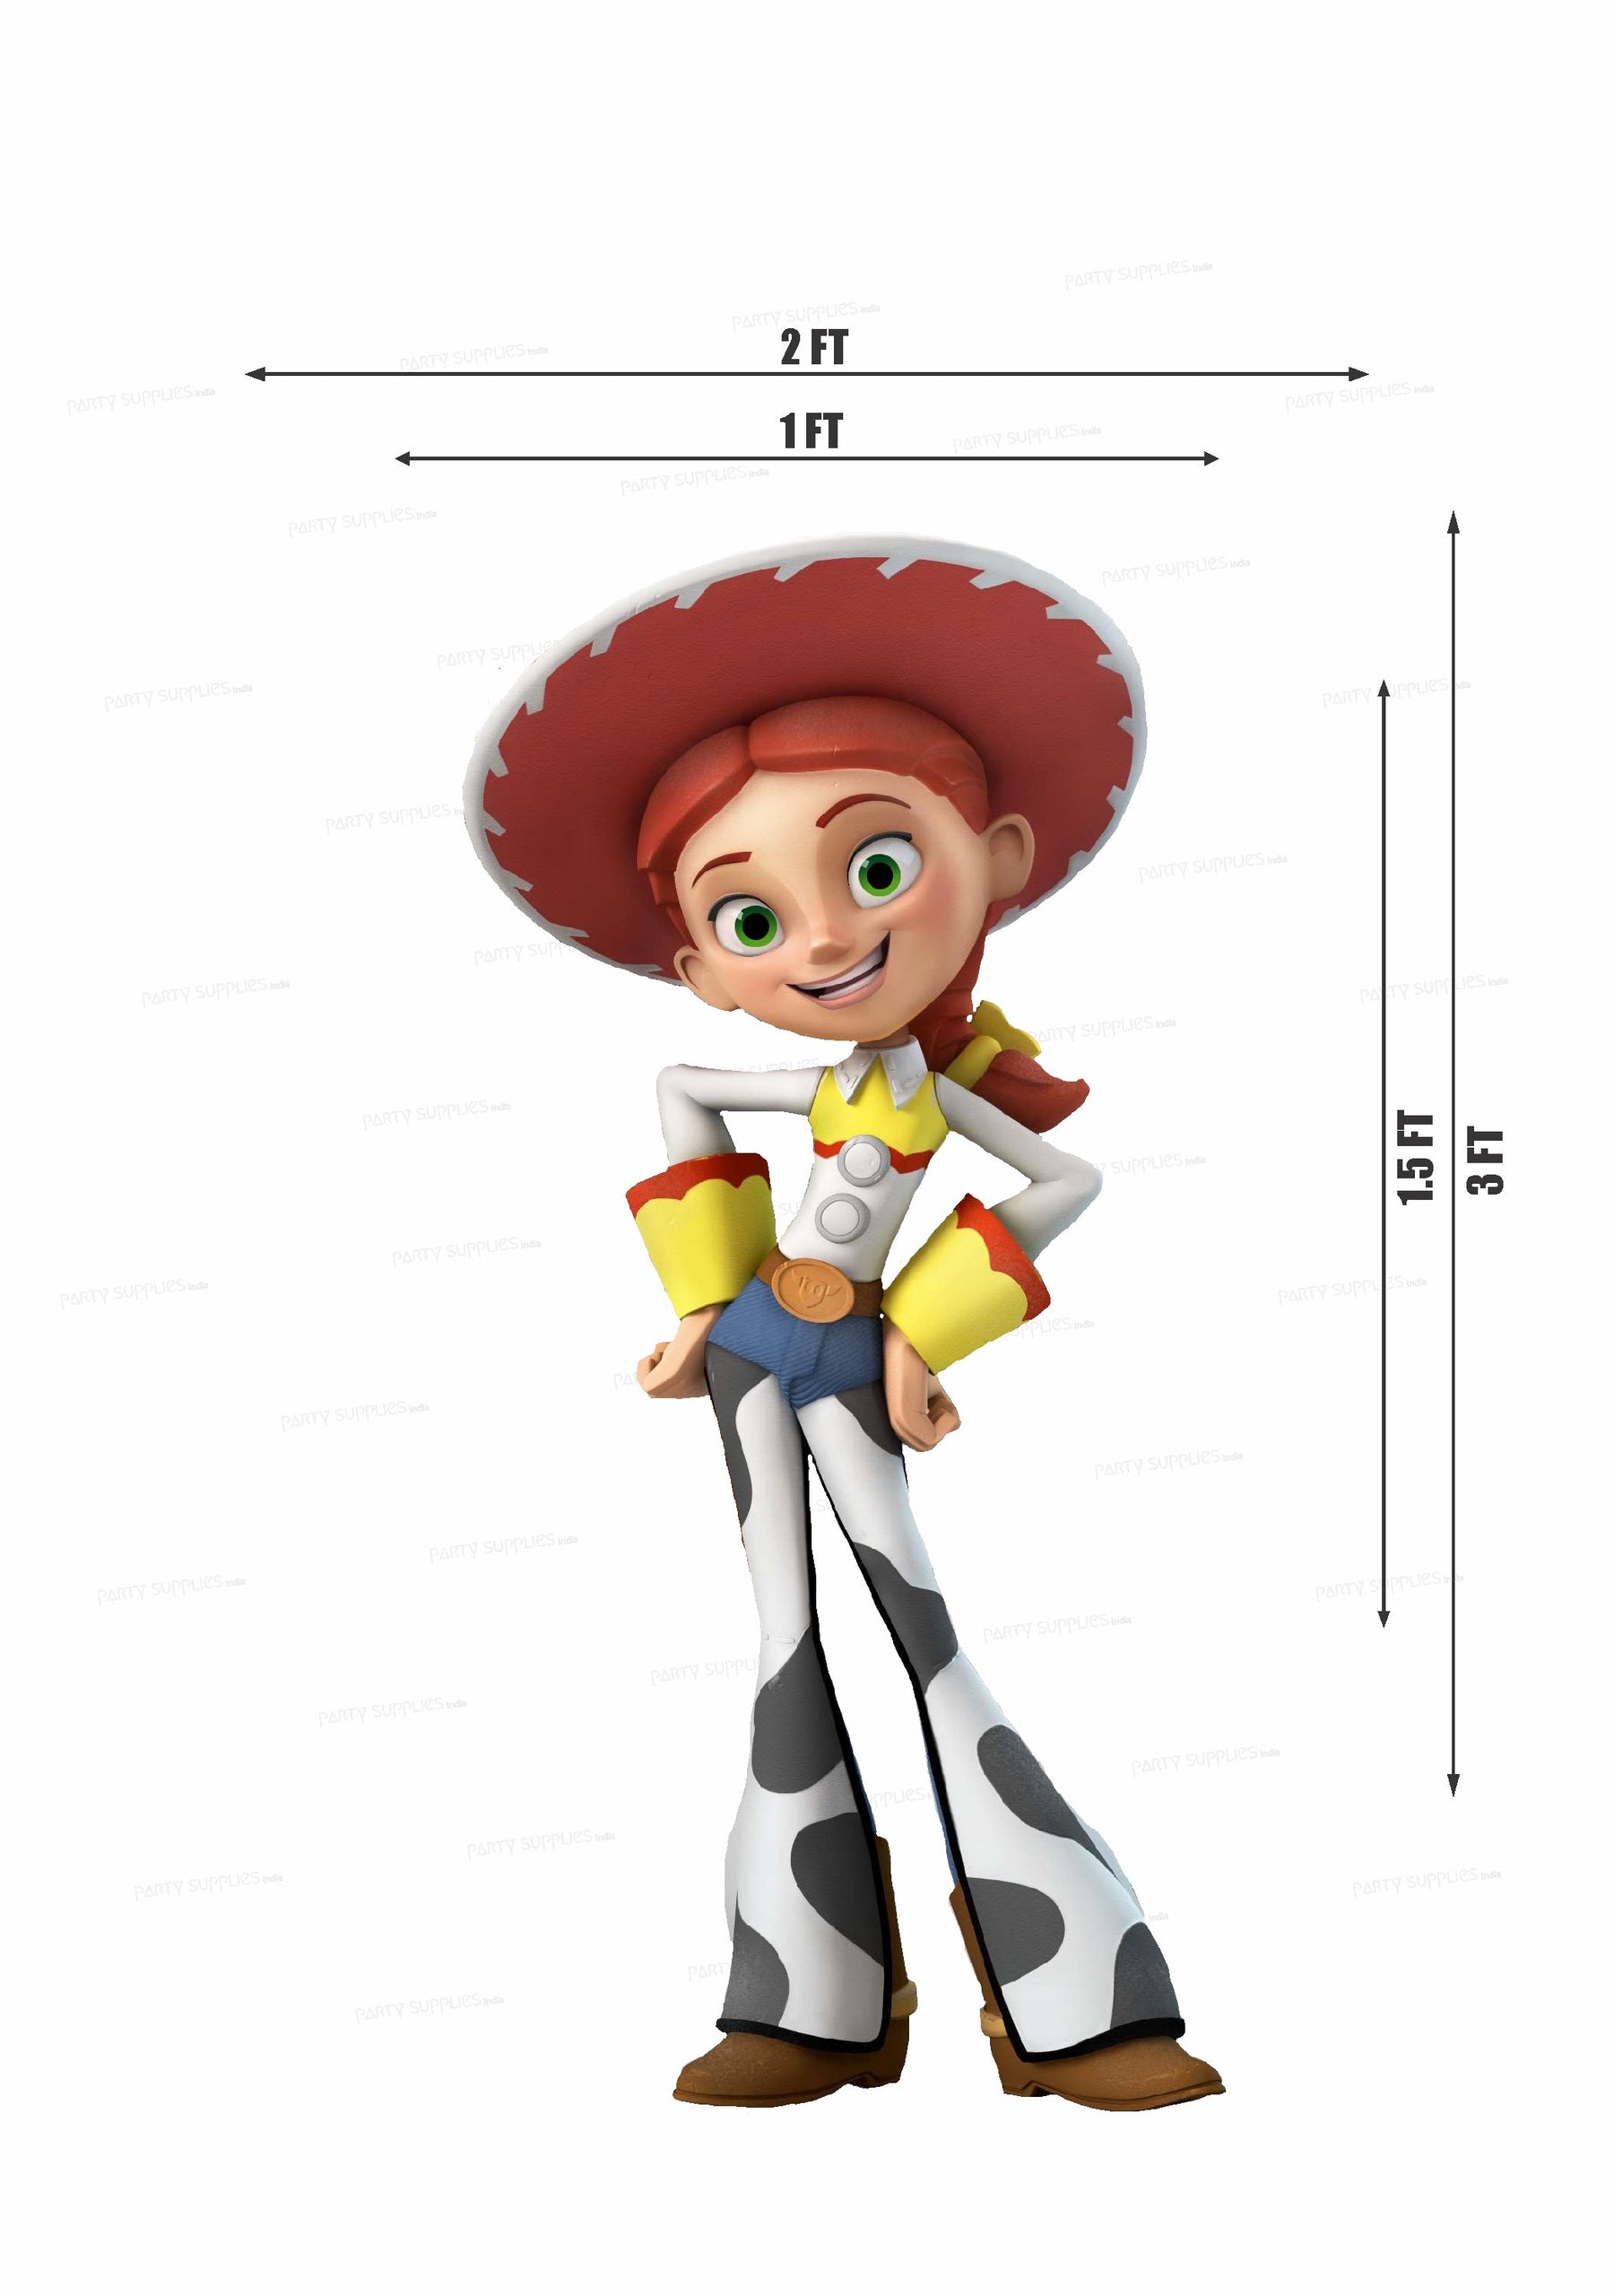 PSI Toy Story Theme Cutout - 14